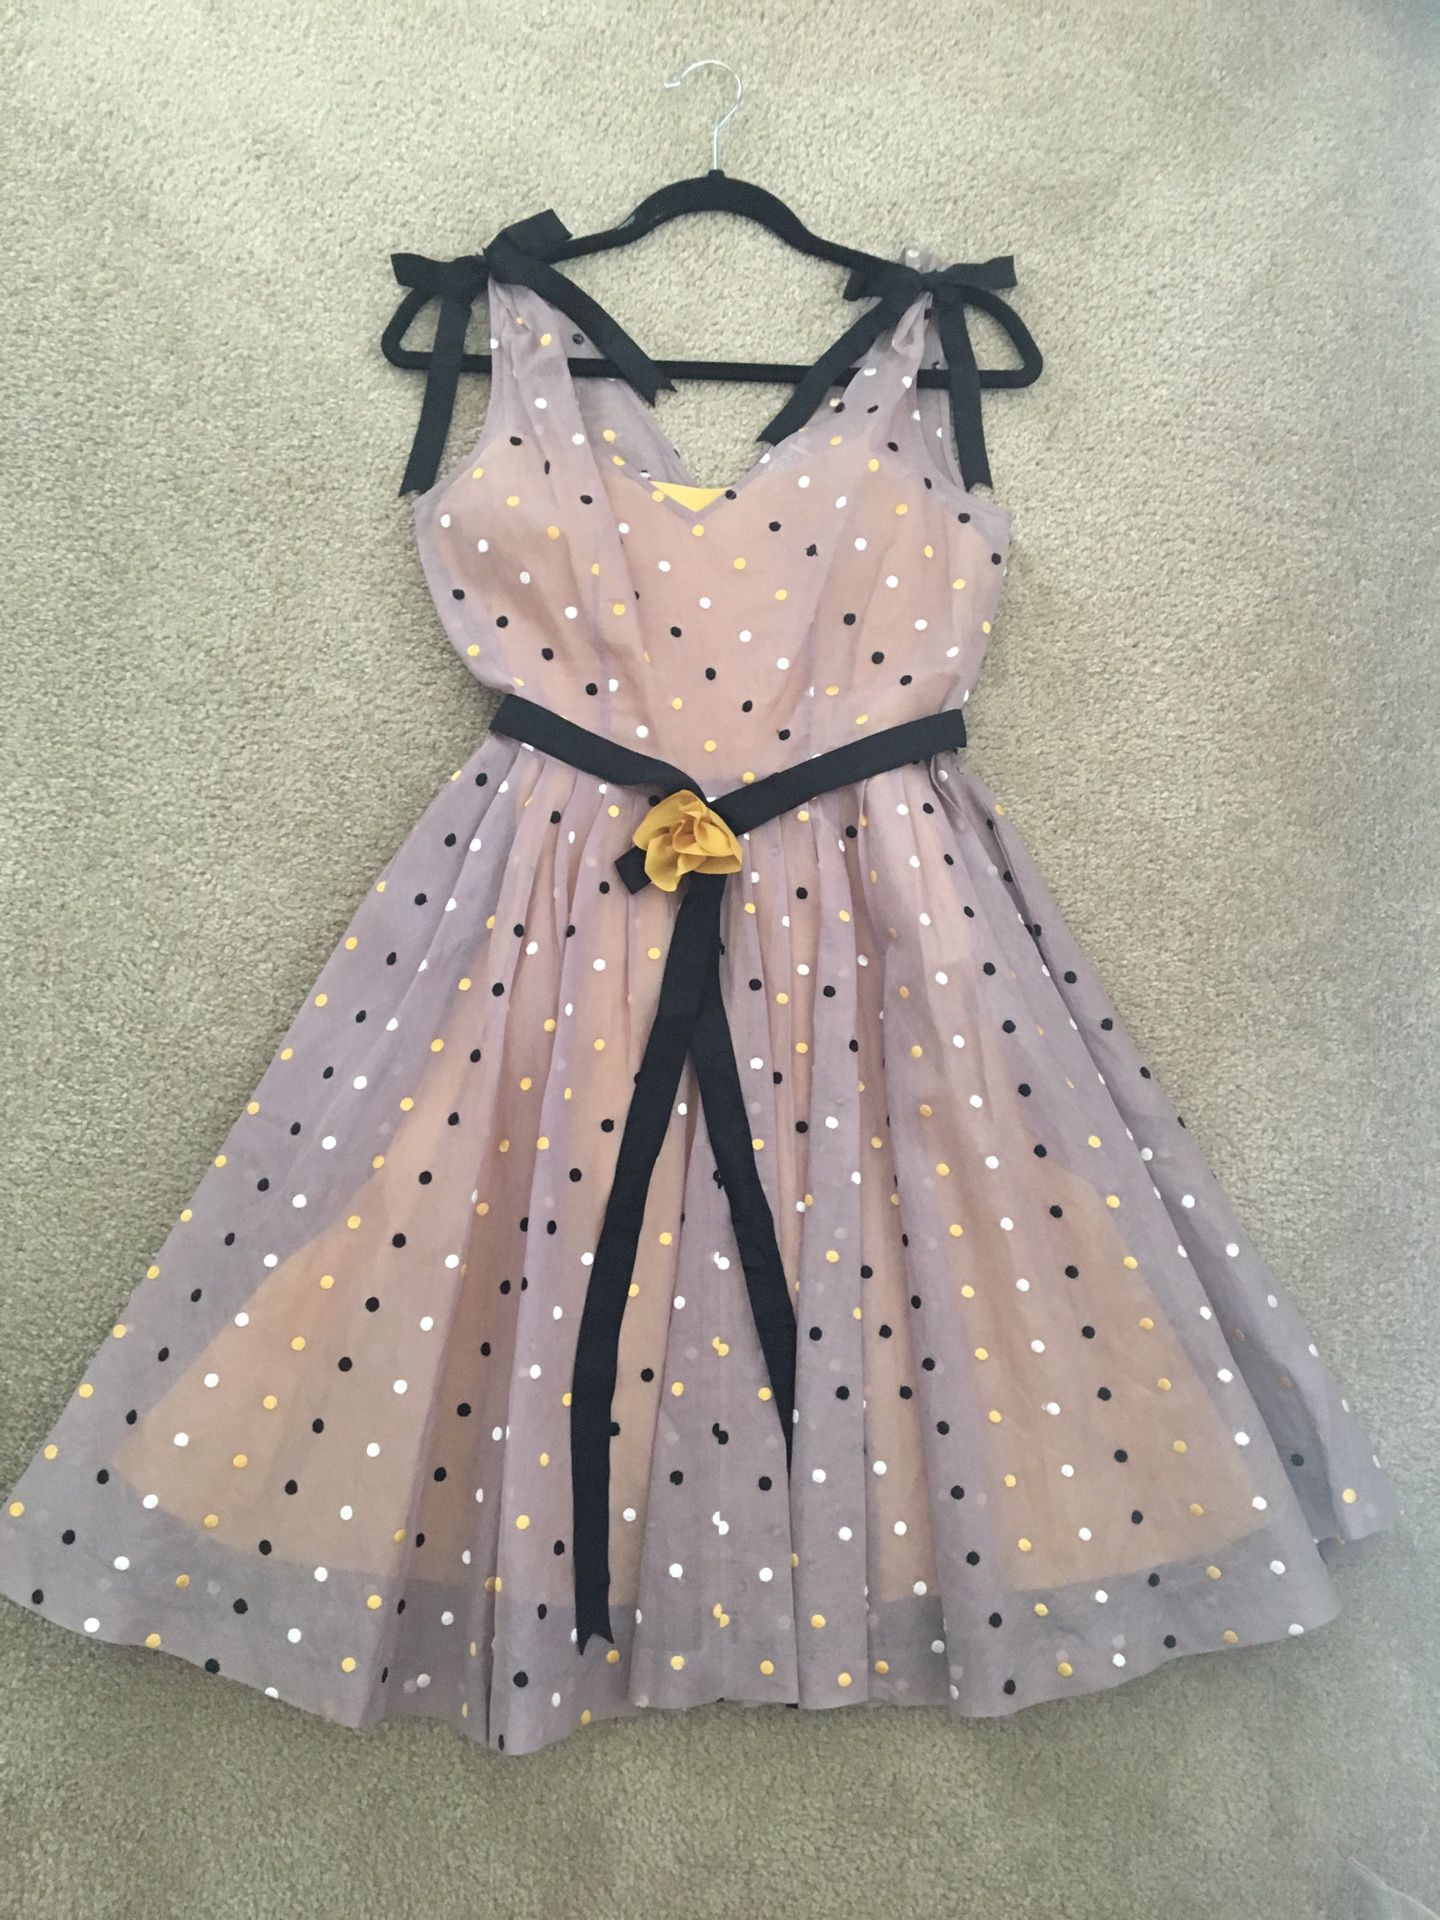 Cute polka dots dress $50.00 Cash